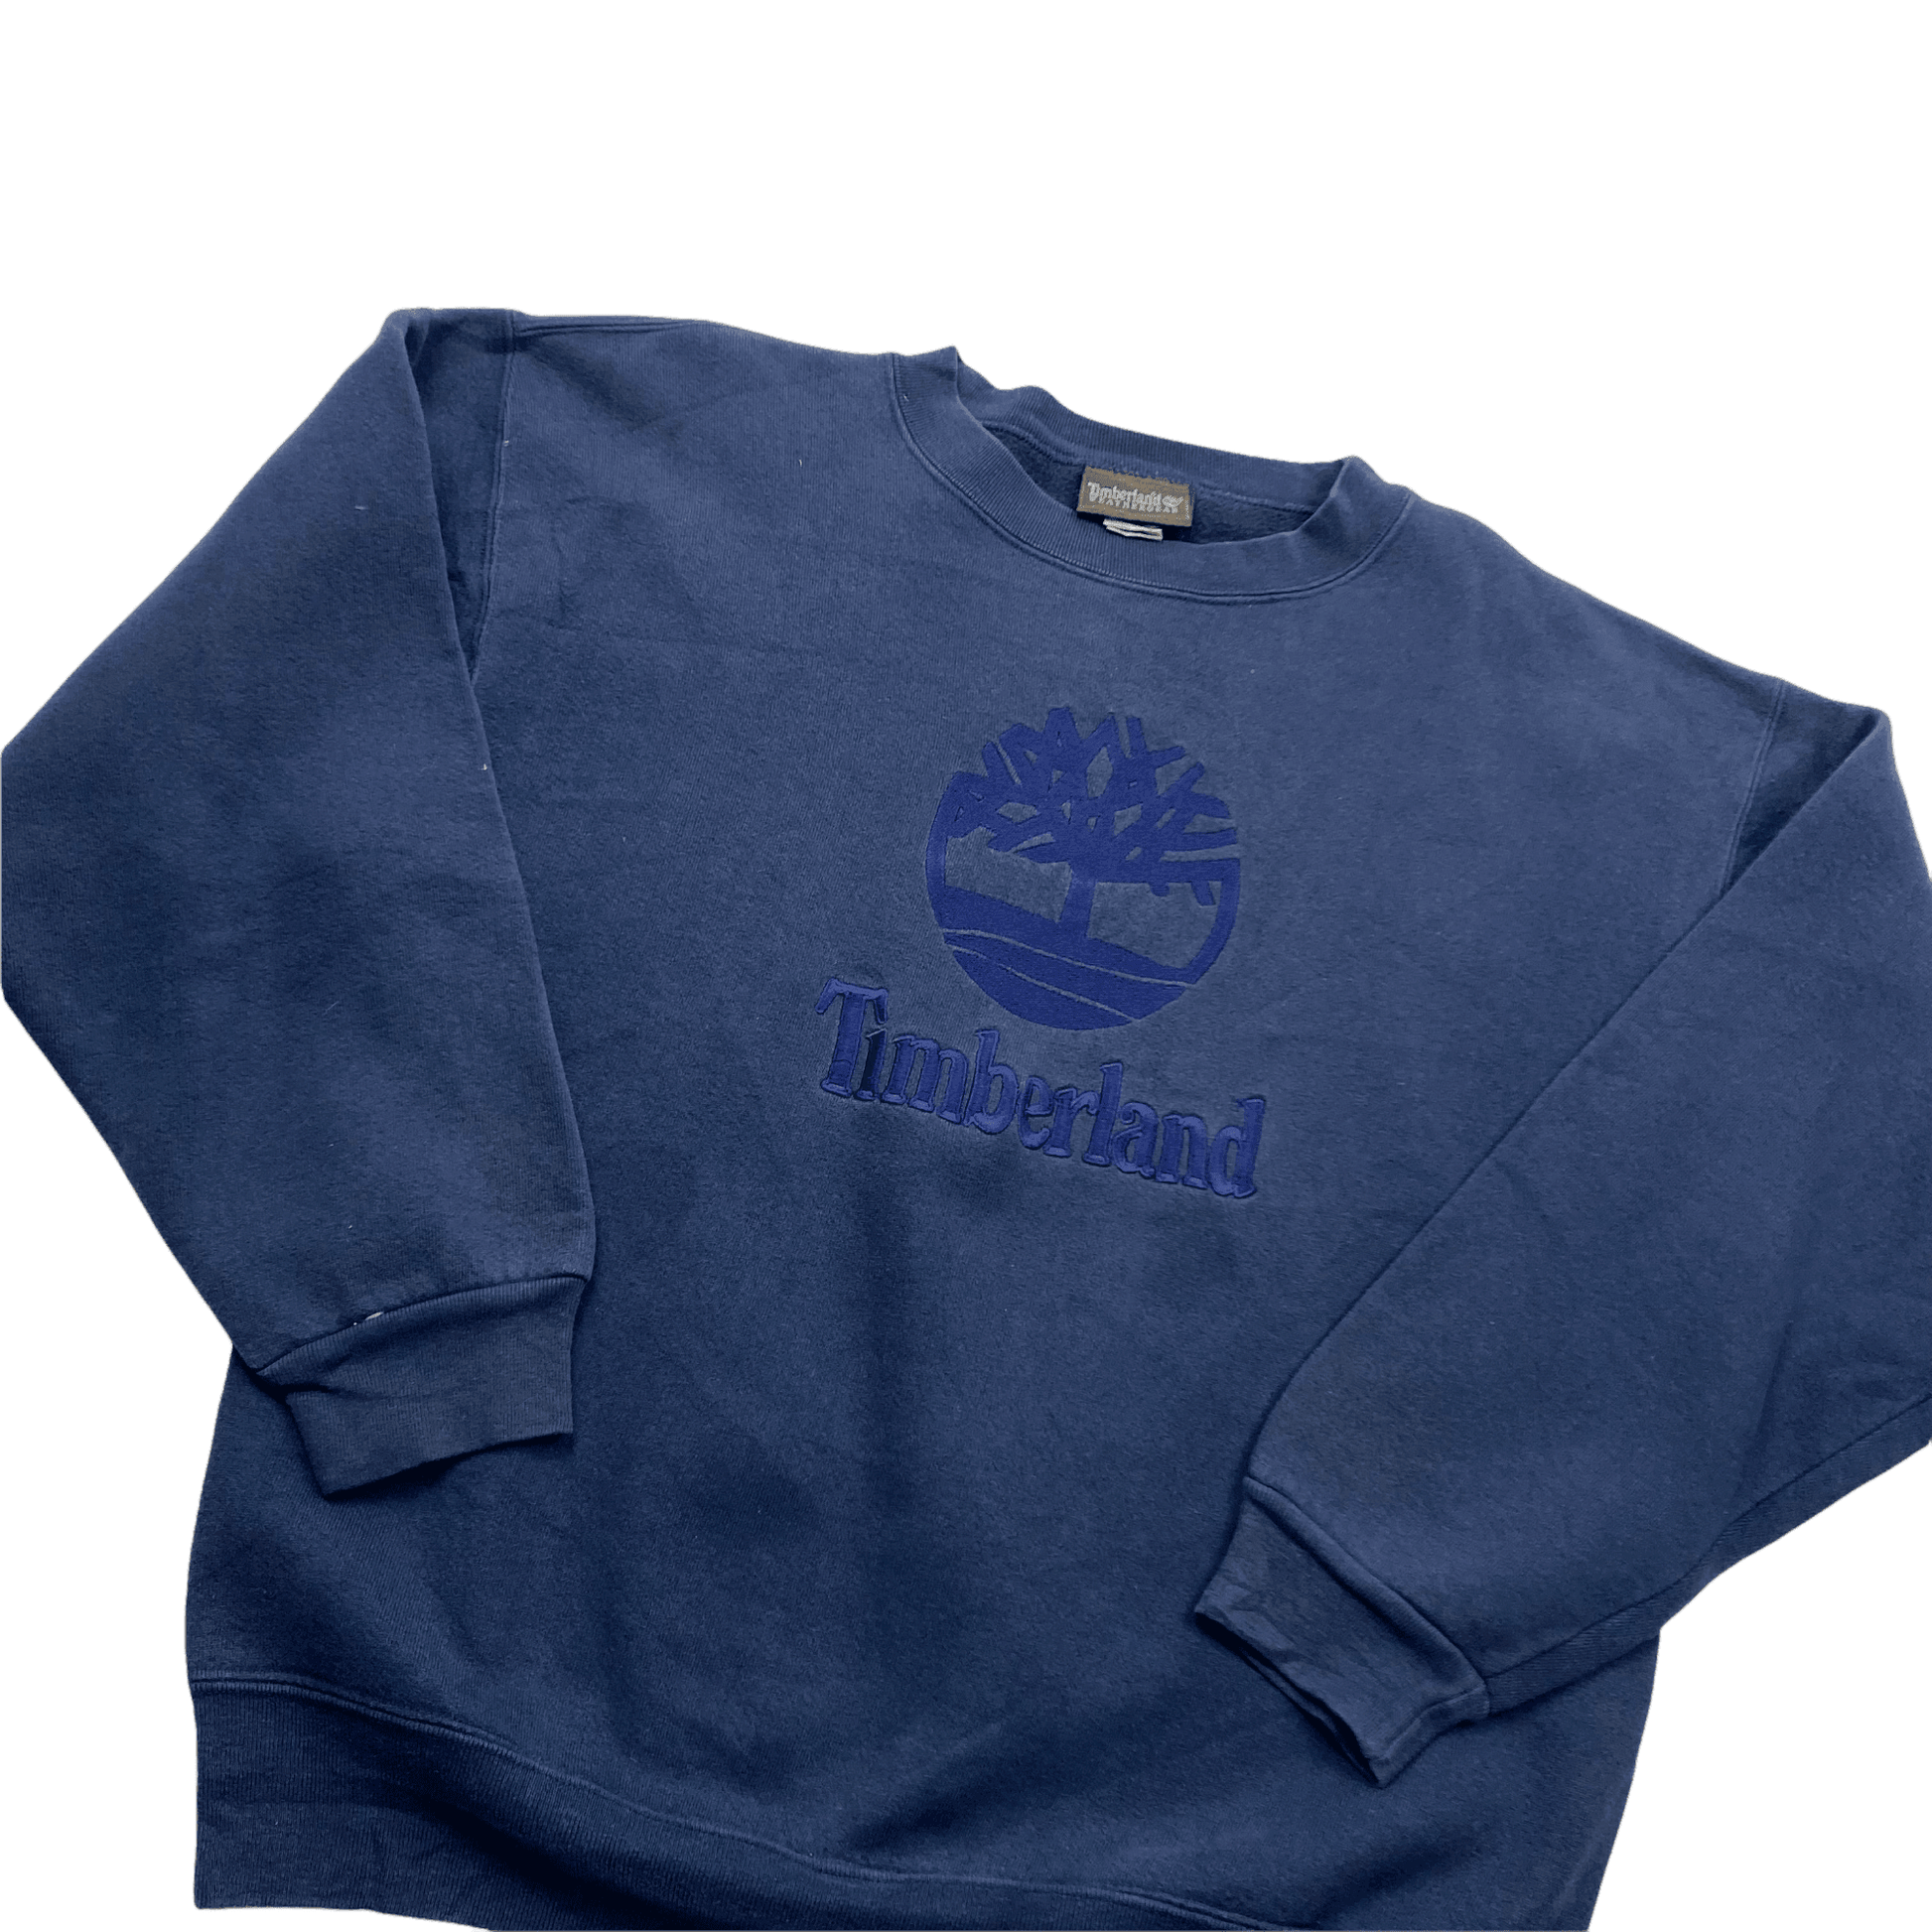 Vintage 90s Navy Blue Timberland Spell-Out Sweatshirt - Medium - The Streetwear Studio